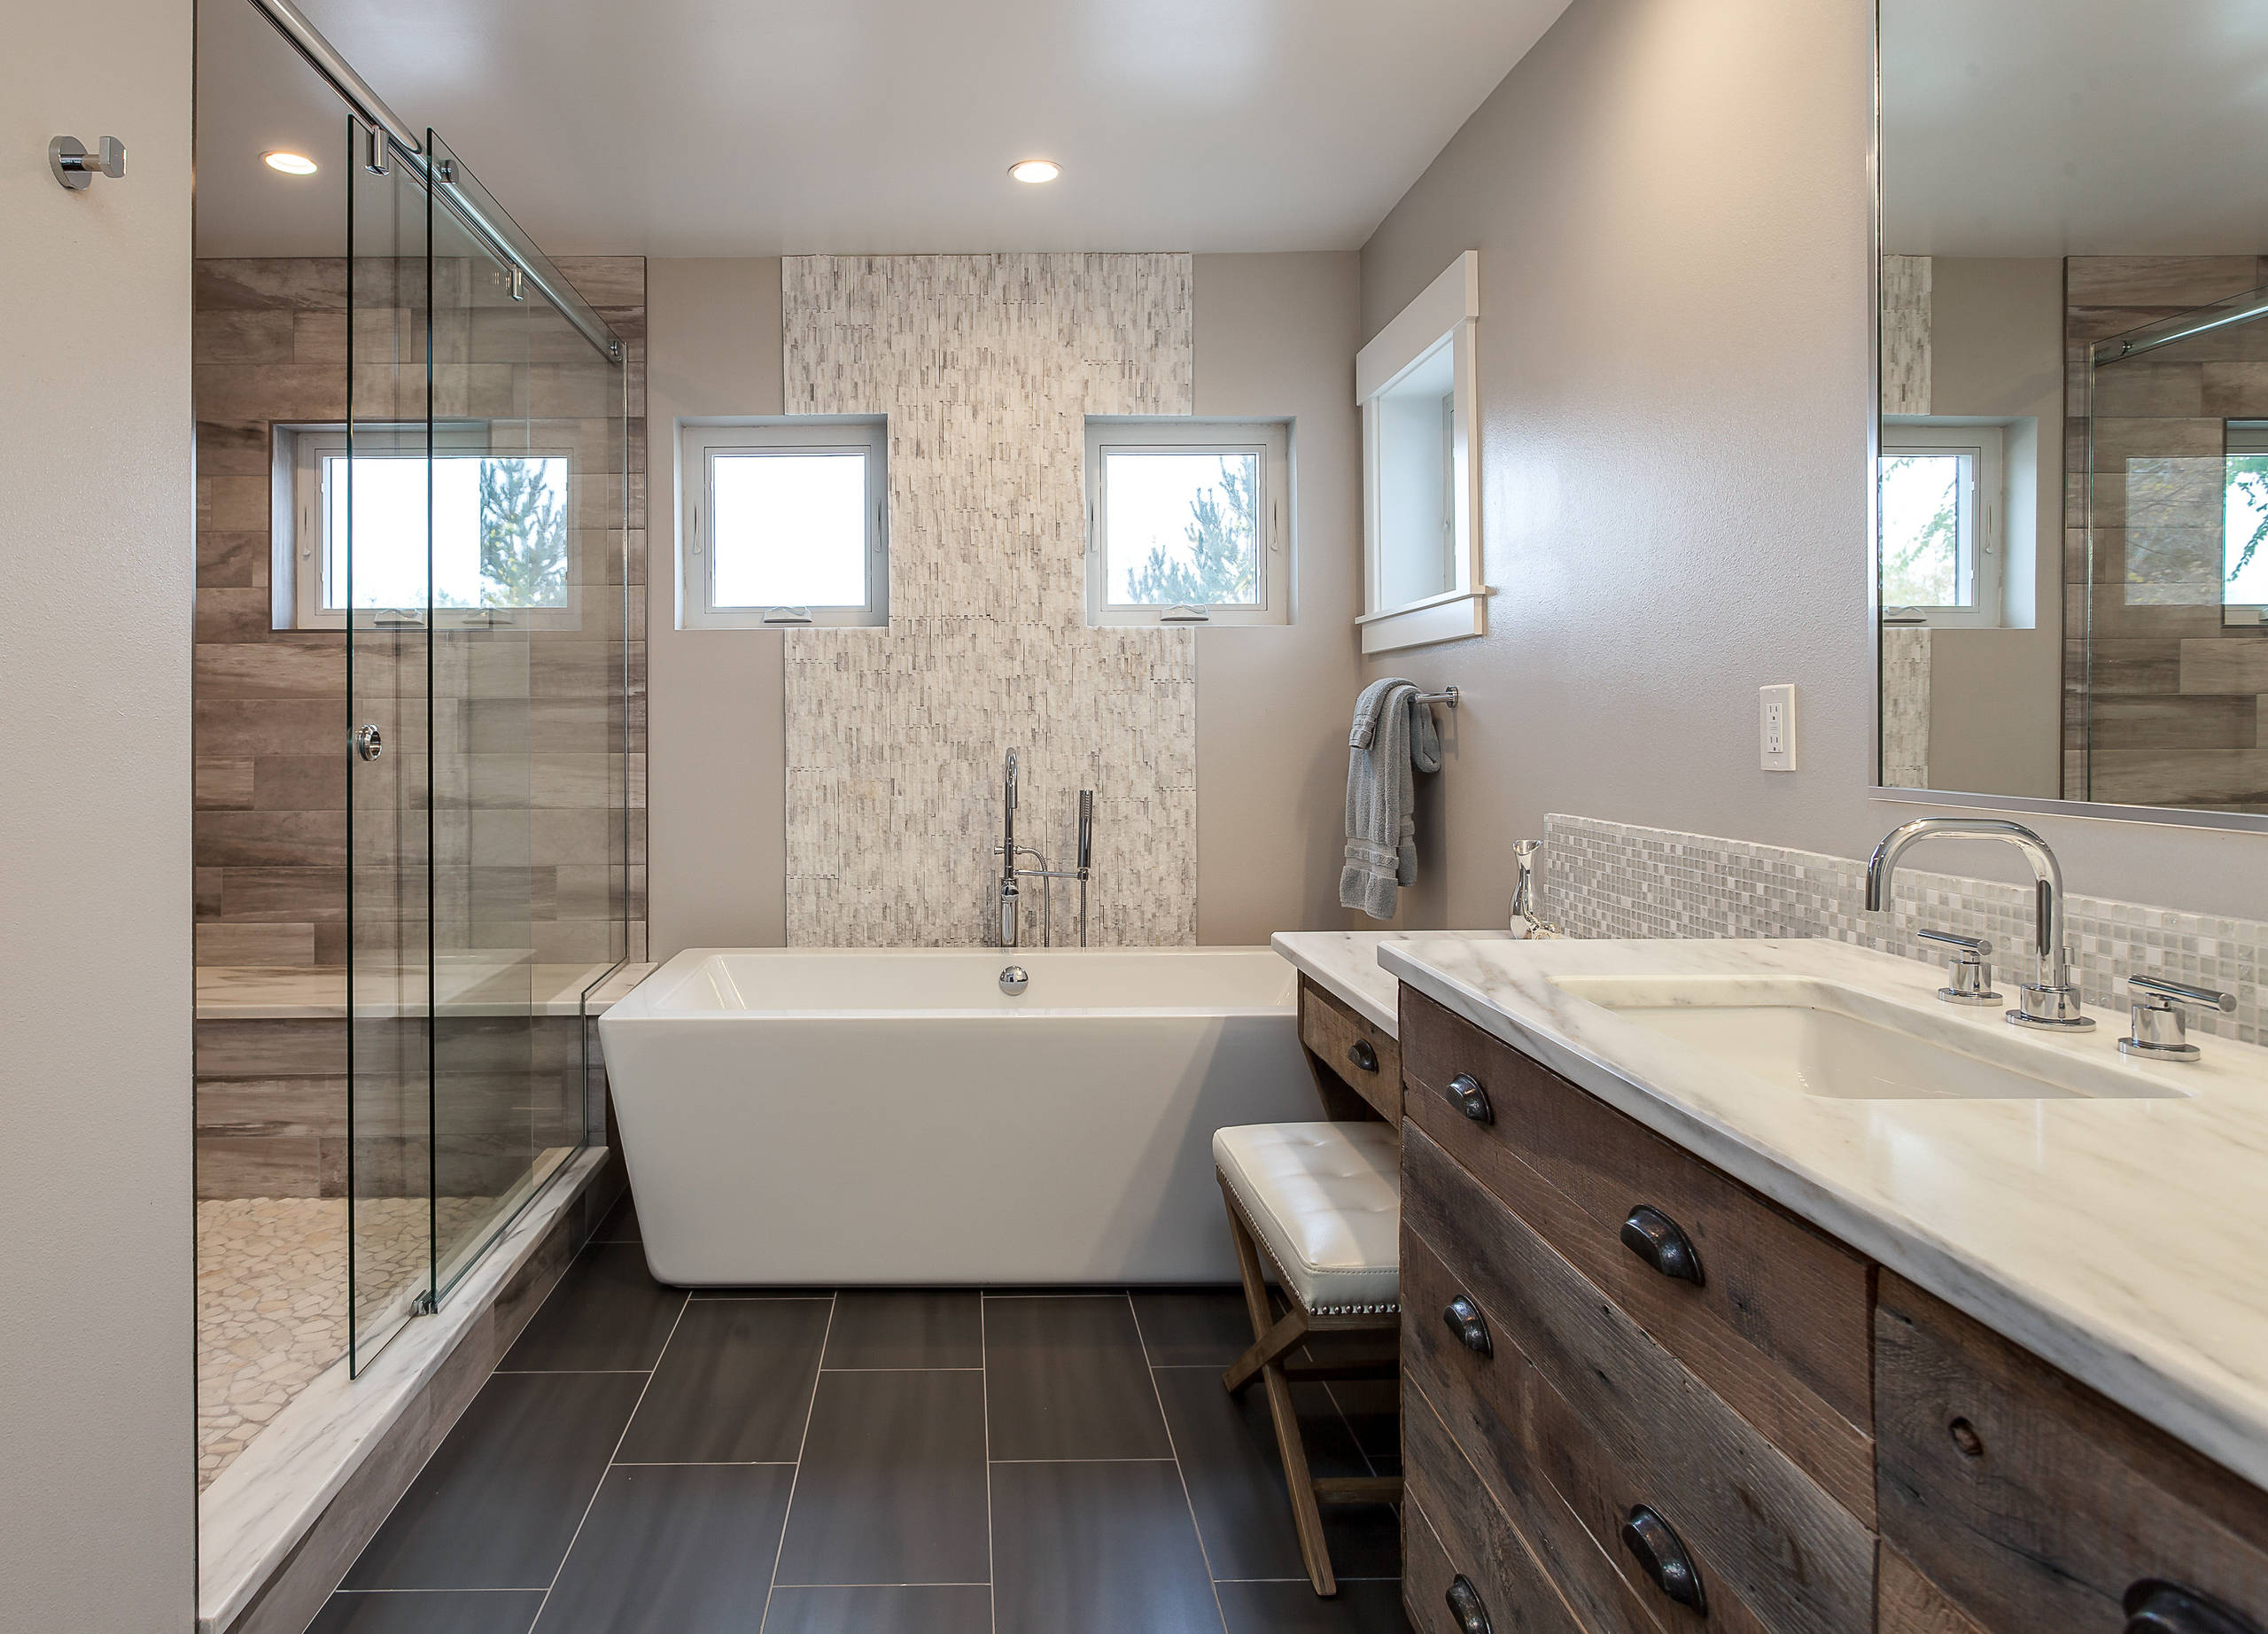 75 Beautiful Rustic Bathroom Design Ideas & Pictures | Houzz